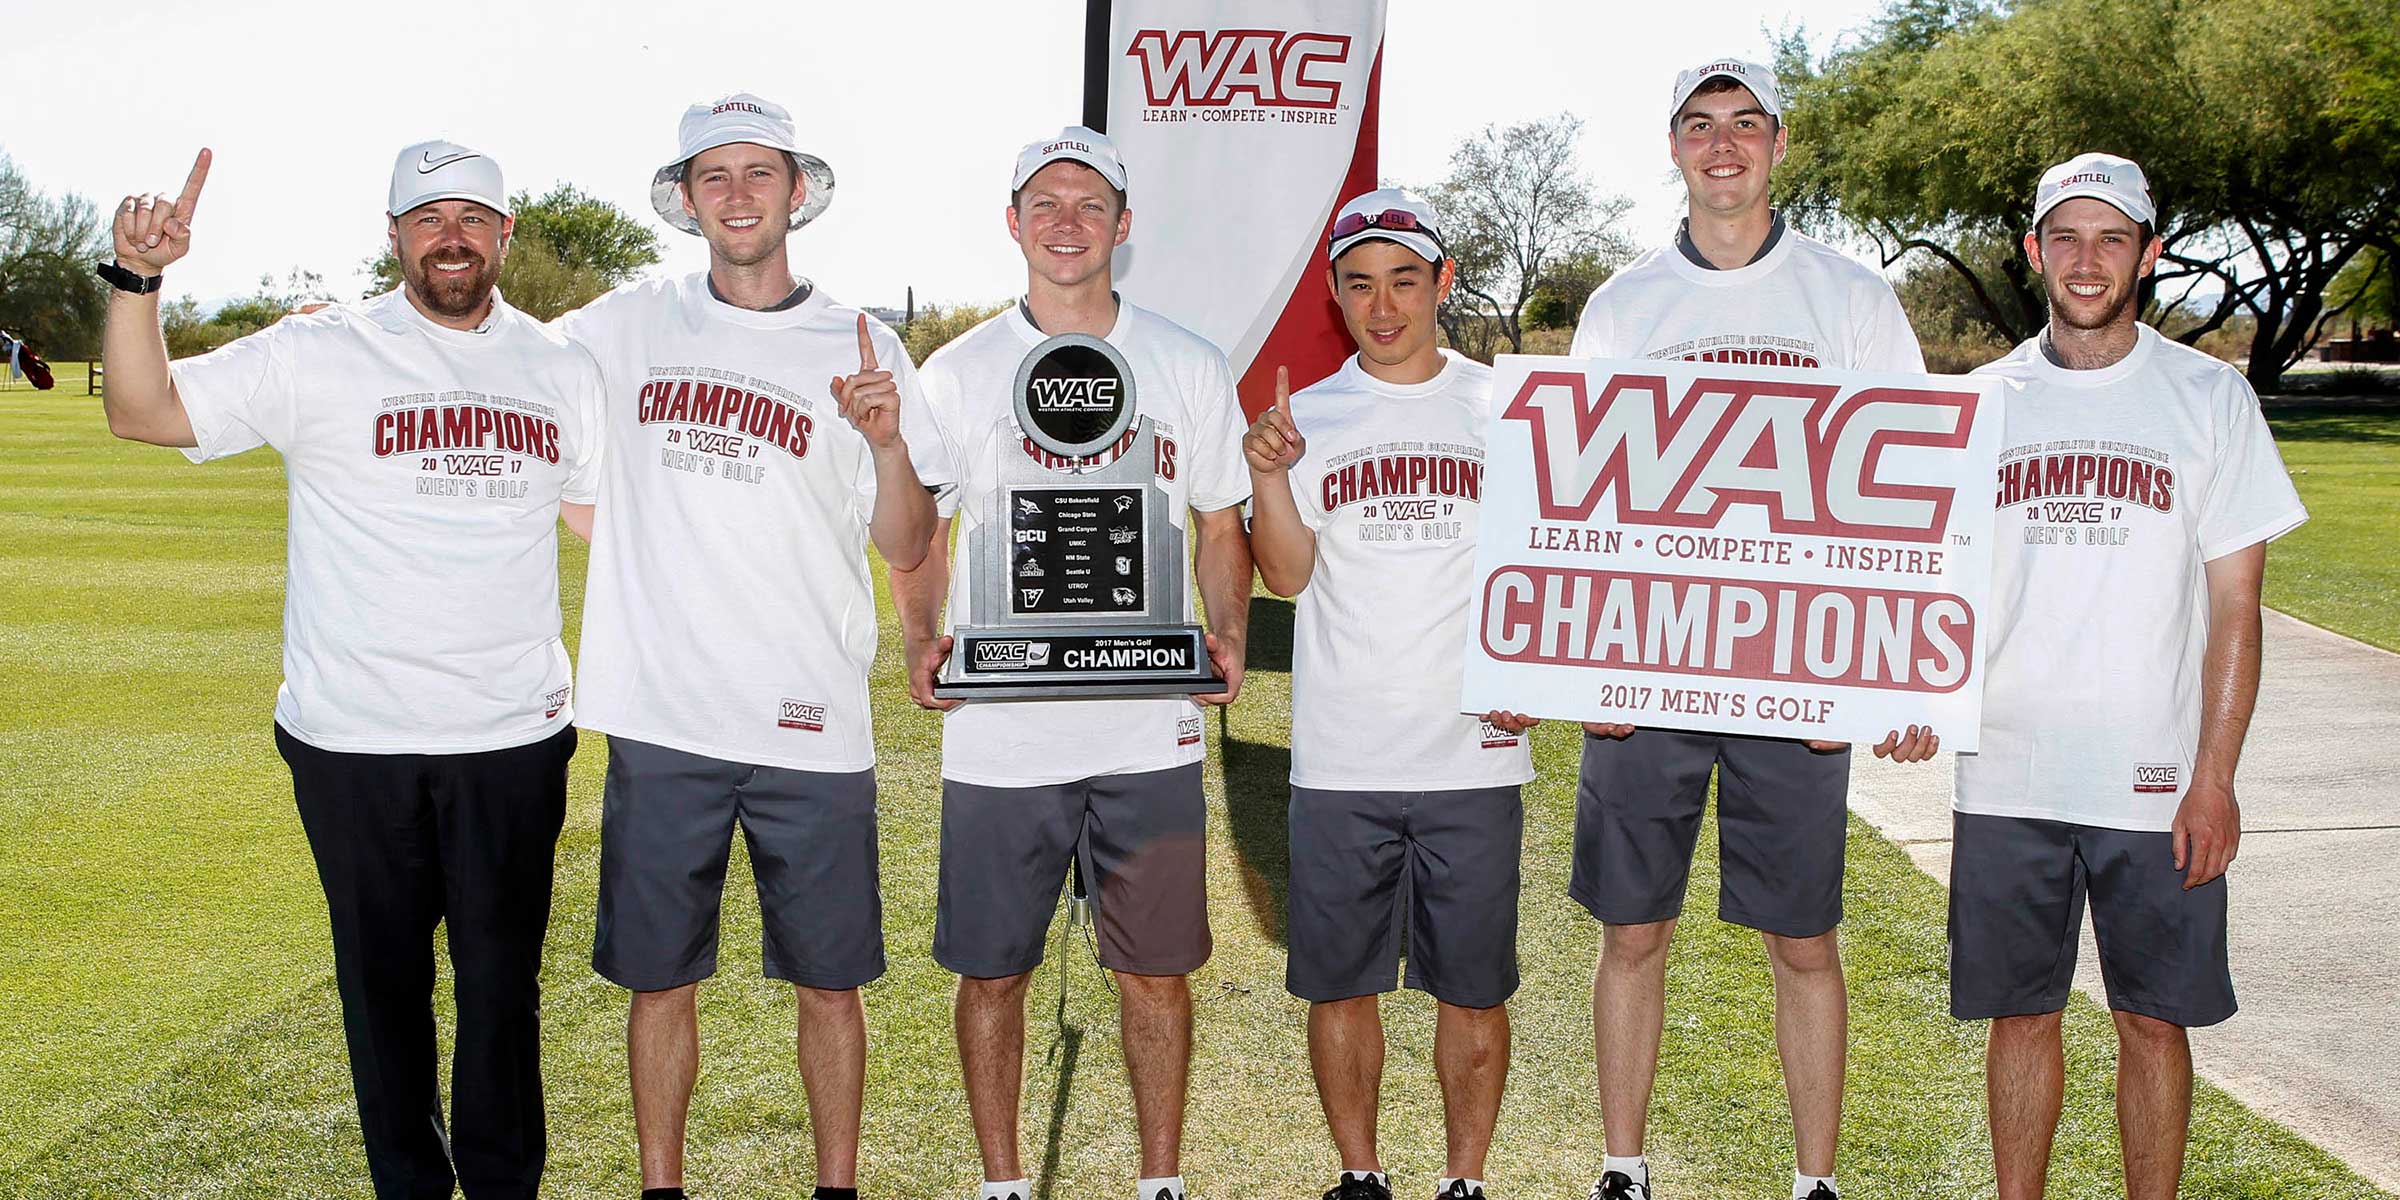 Men's Golf Team holding the WAC Championship Trophy